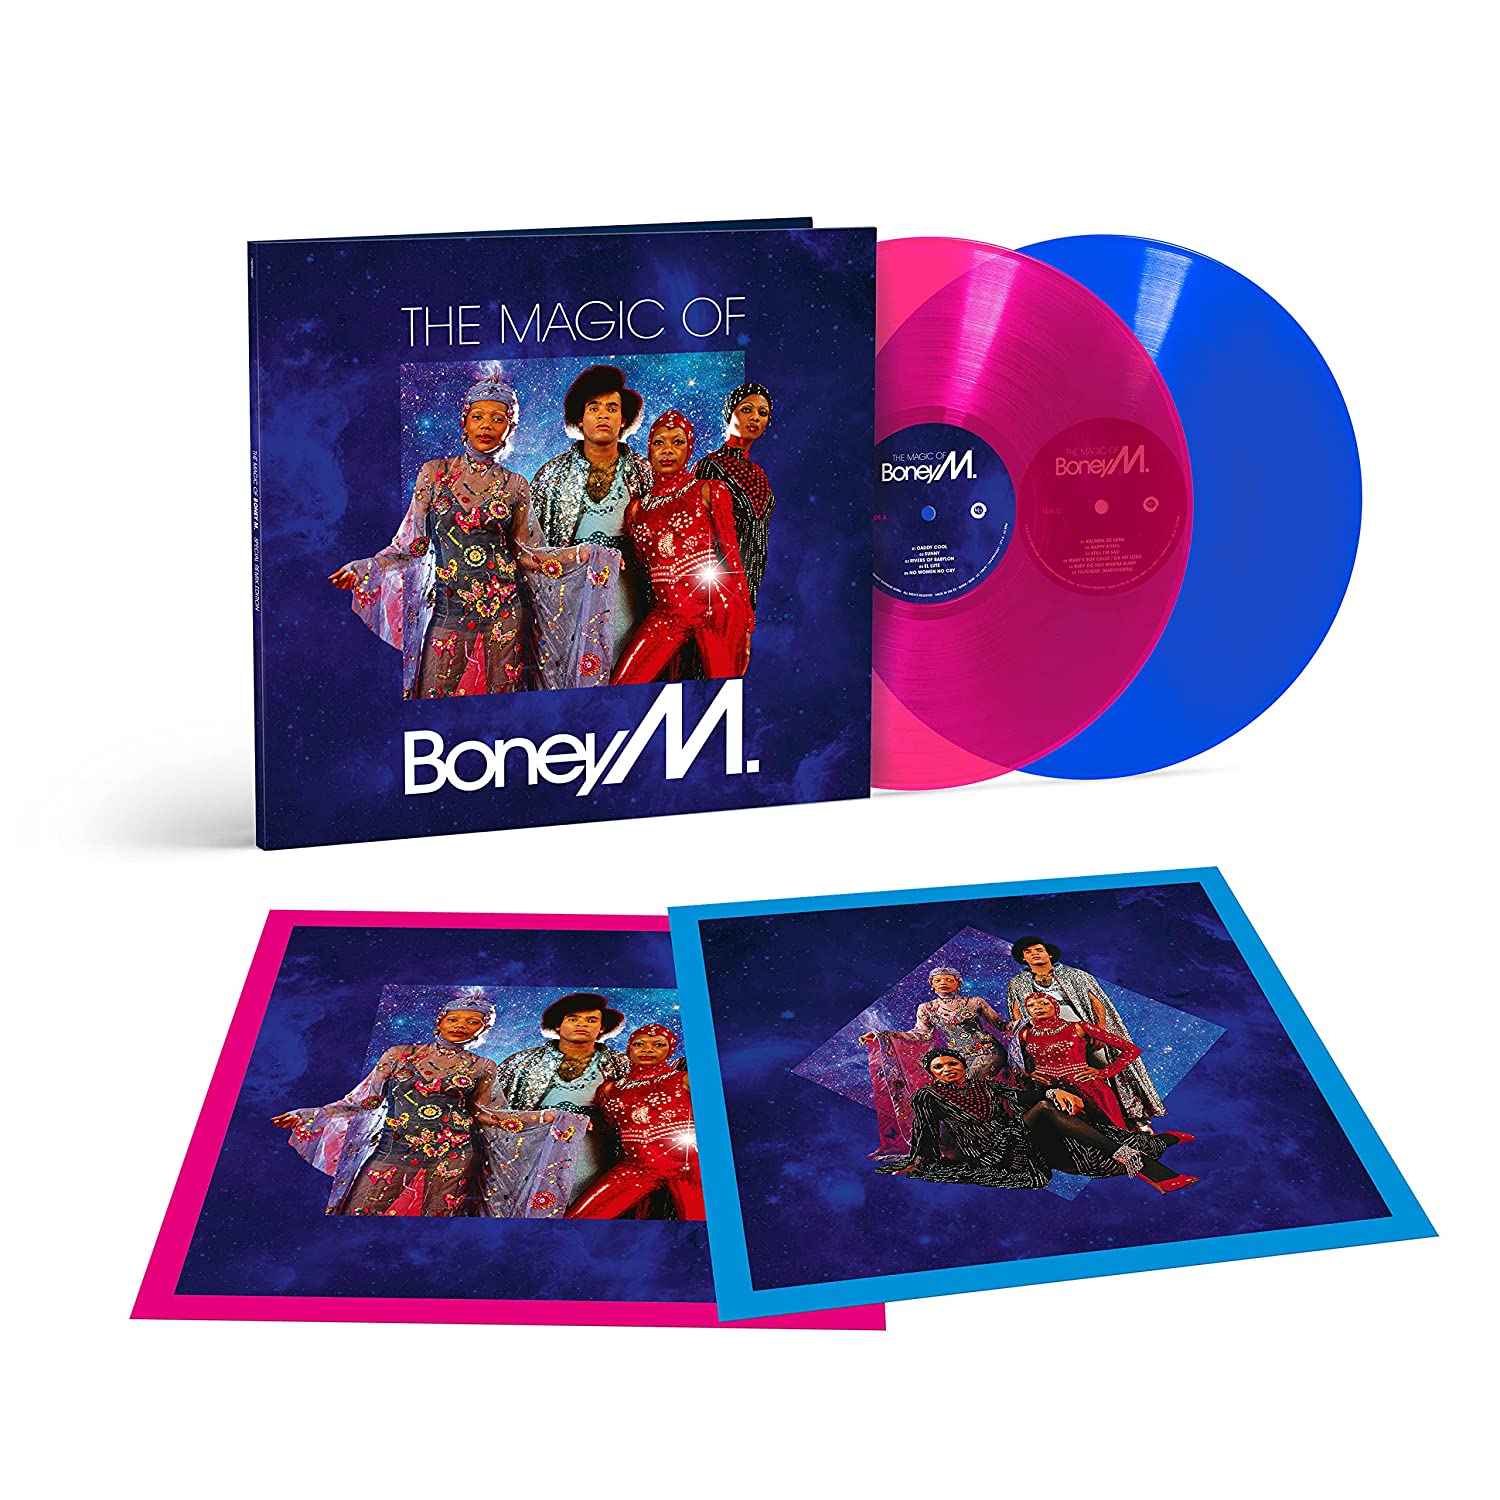 Boney M. - The Magic of Boney M. (Special Remix Edition) (Pink & Blue Vinyl)